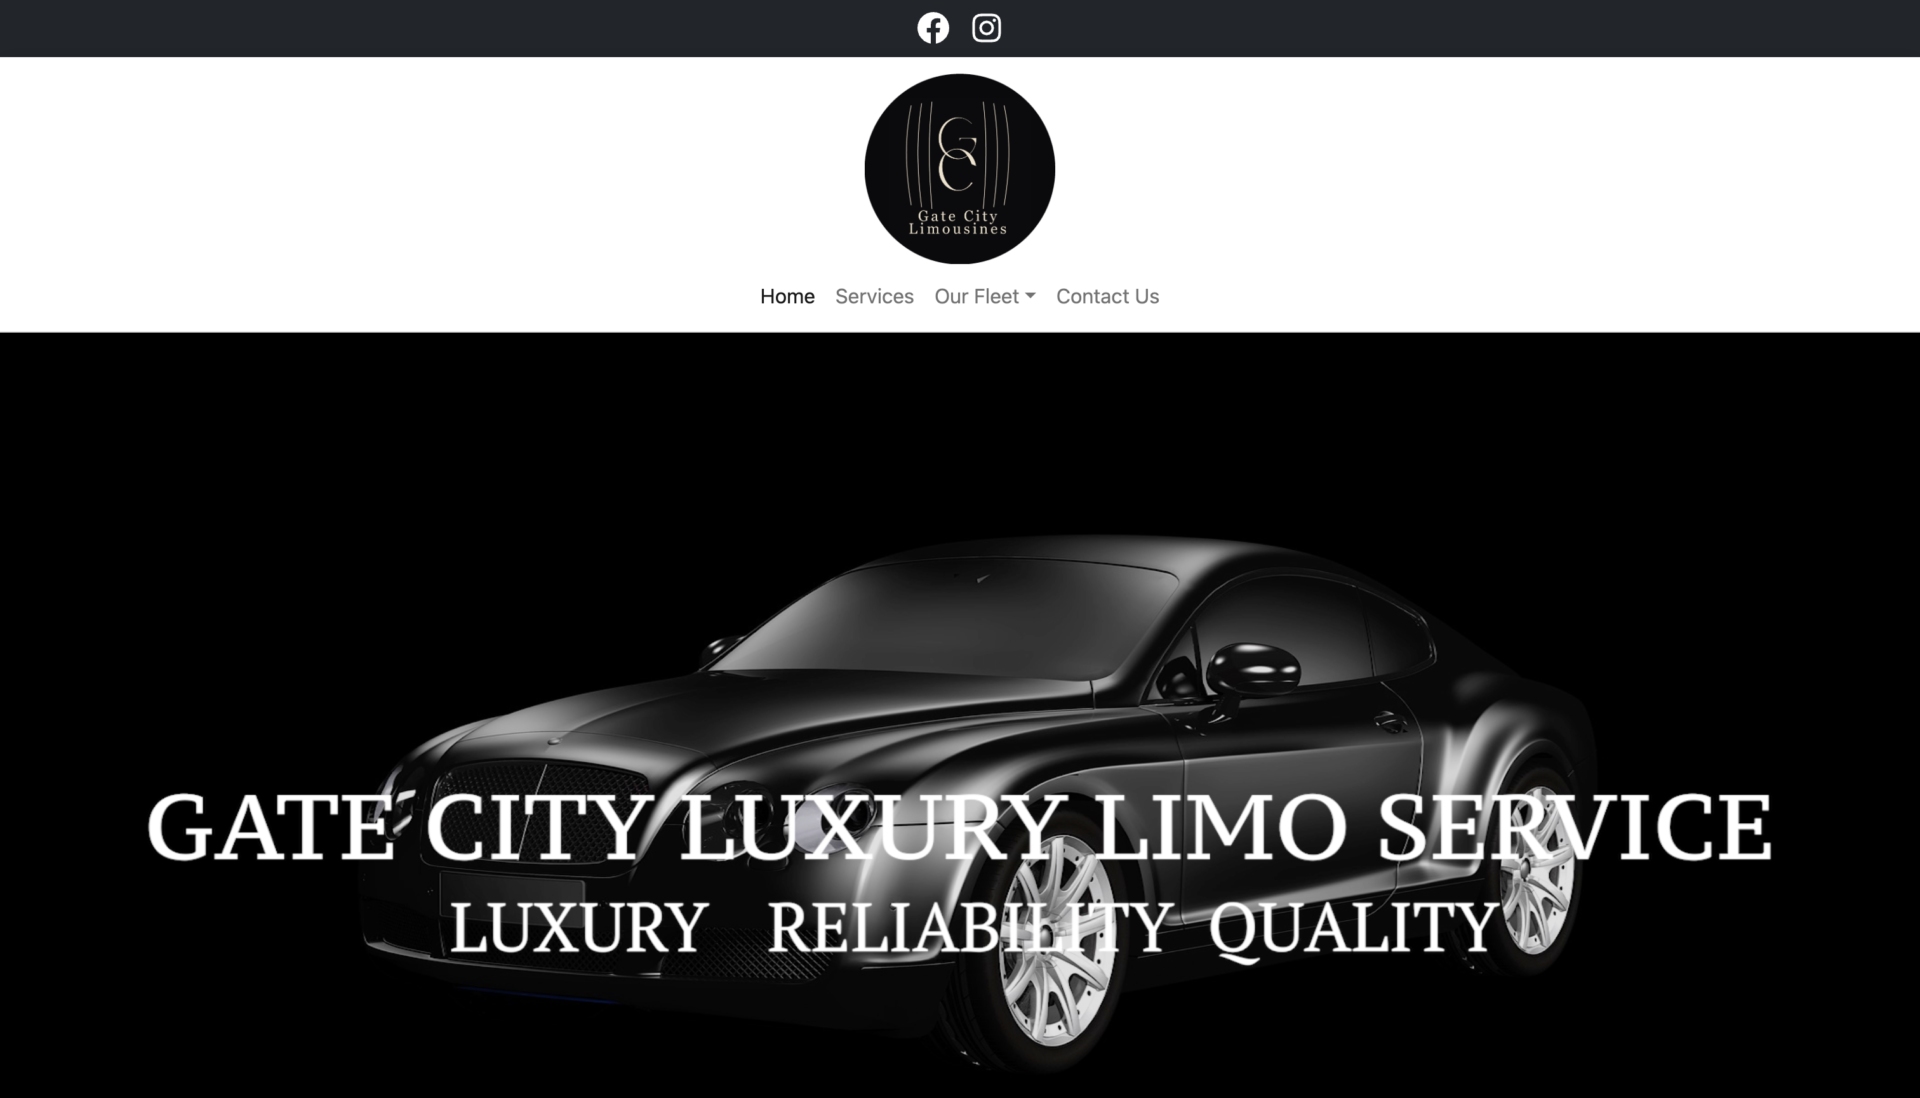 Gate City Luxury Limo Service website screenshot